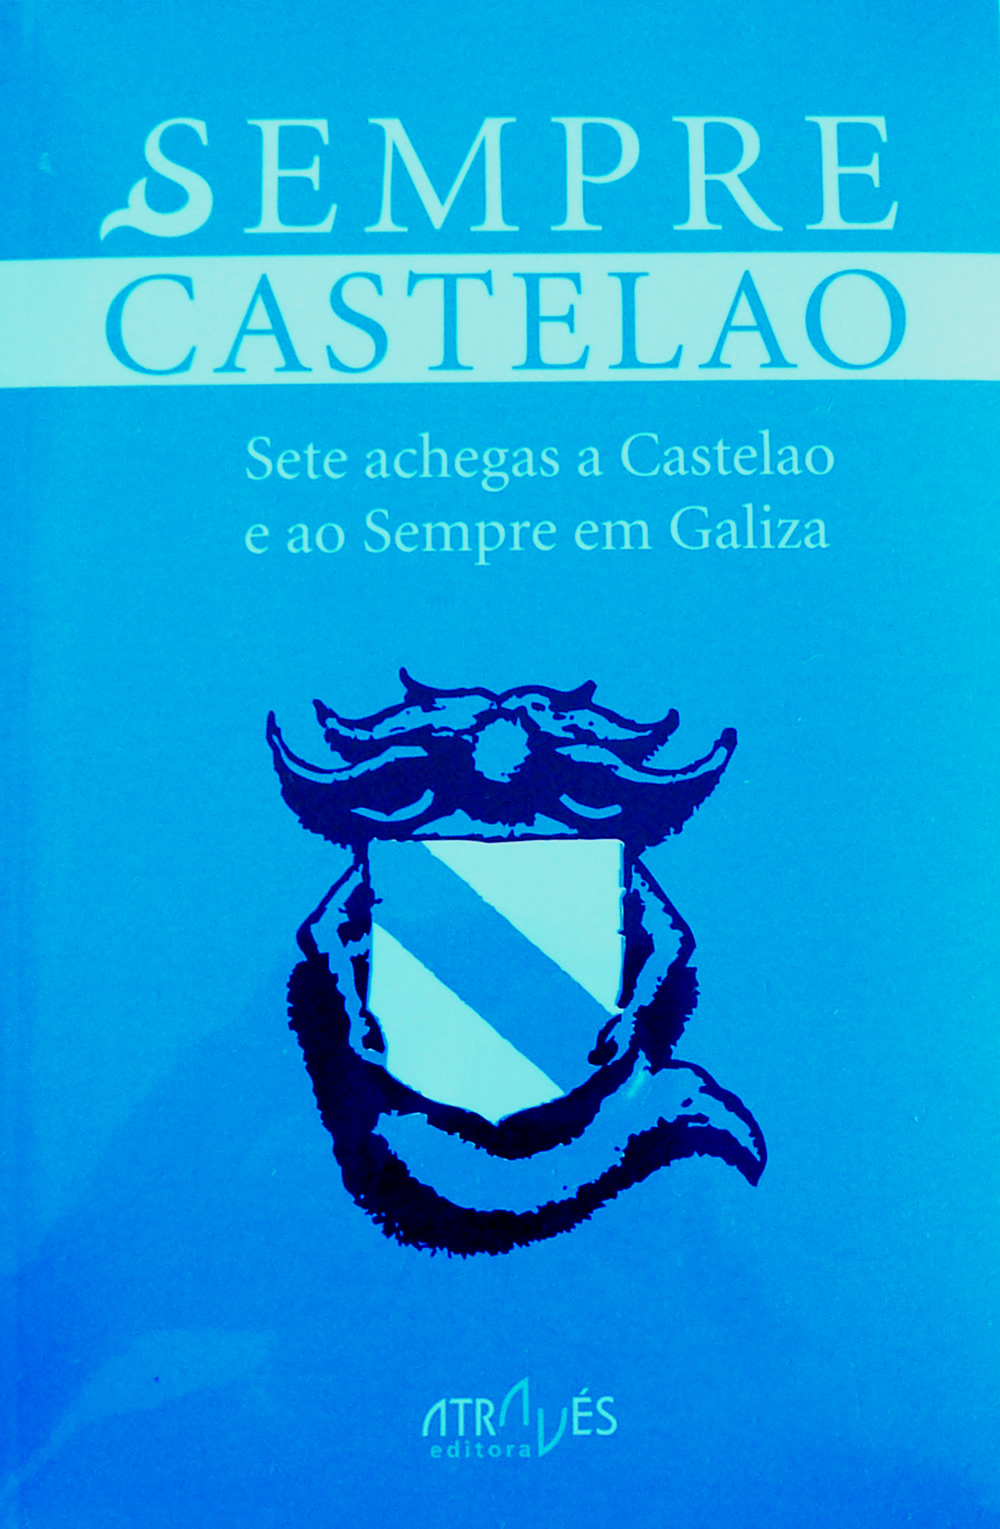 Capa da separata "Sempre Castelao"